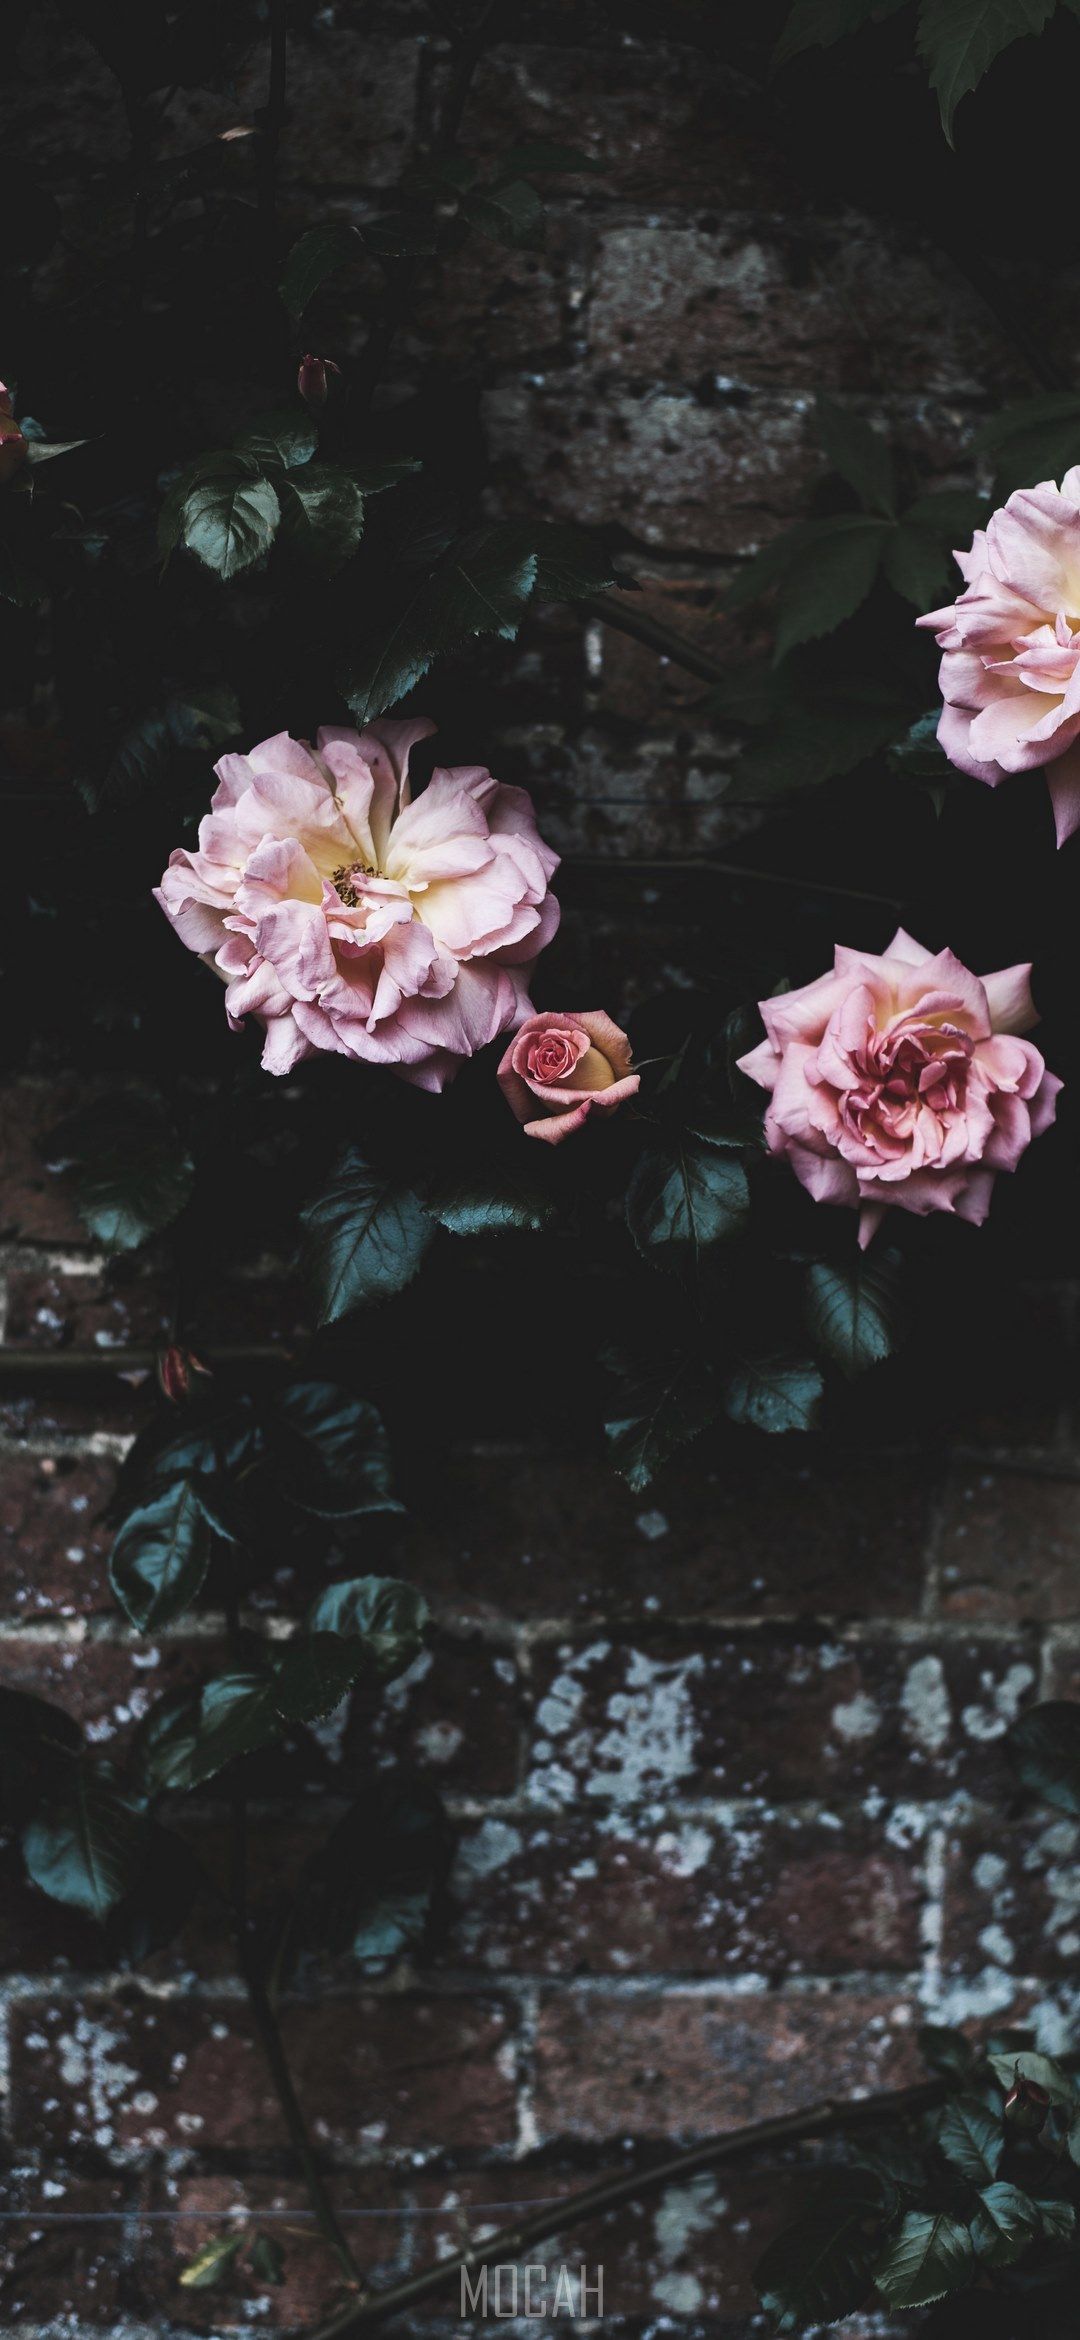 IPhone wallpaper of pink roses climbing up a brick wall. - Garden